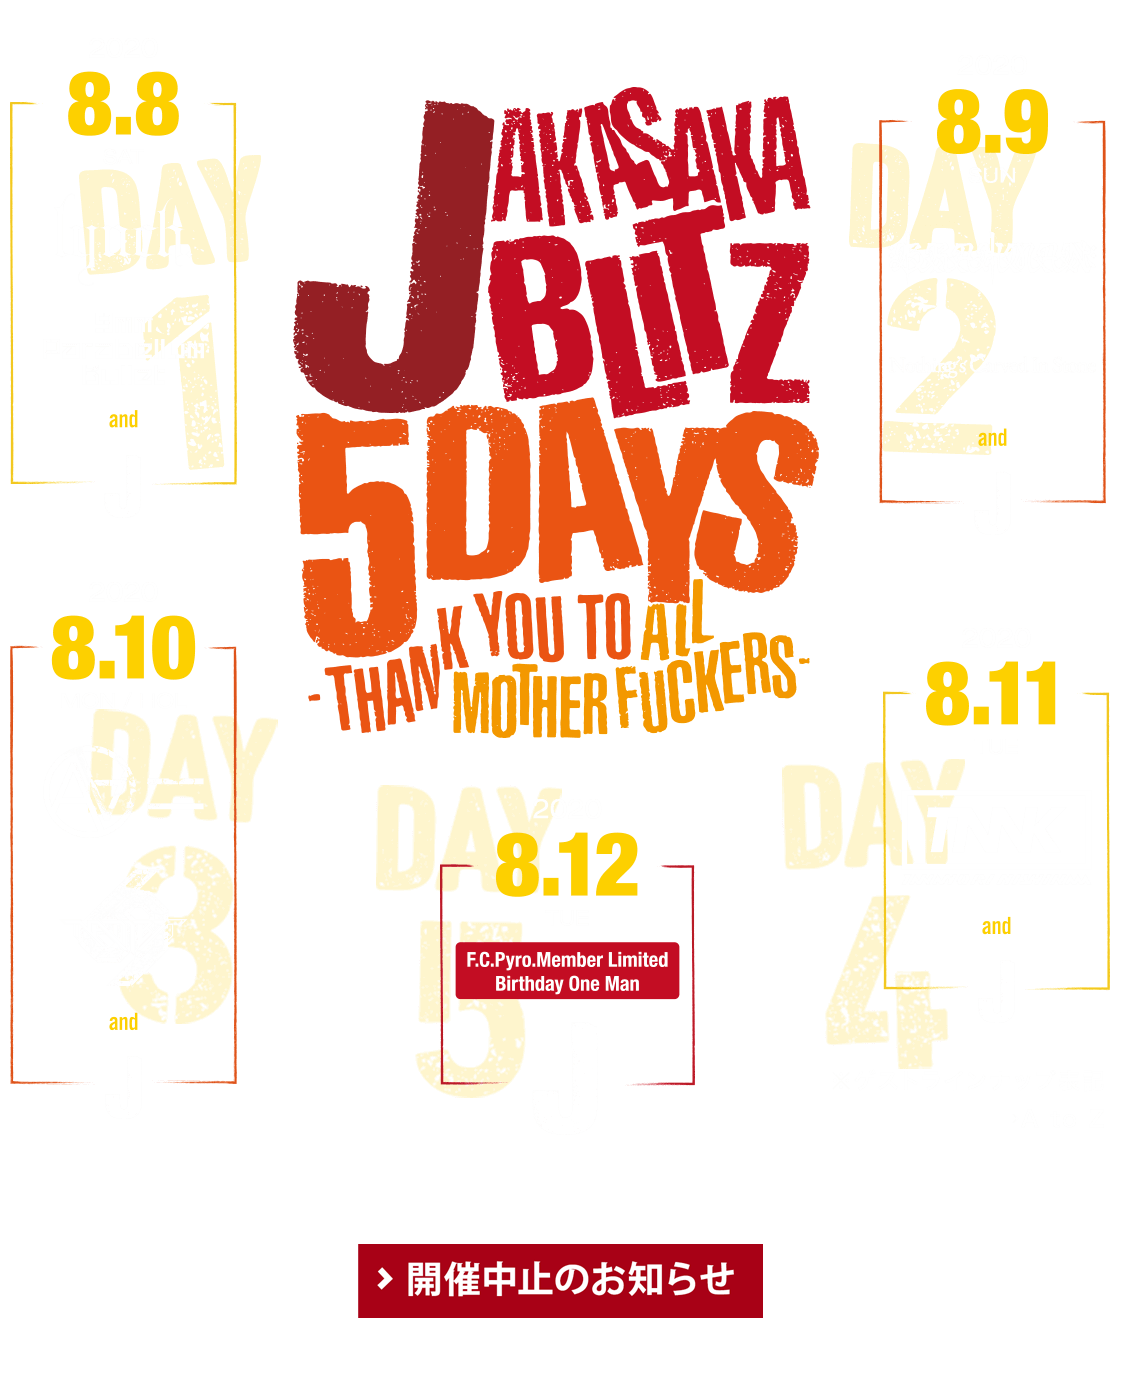 J AKASAKA BLITZ 5DAYS -THANK YOU TO ALL MOTHER FUCKERS-